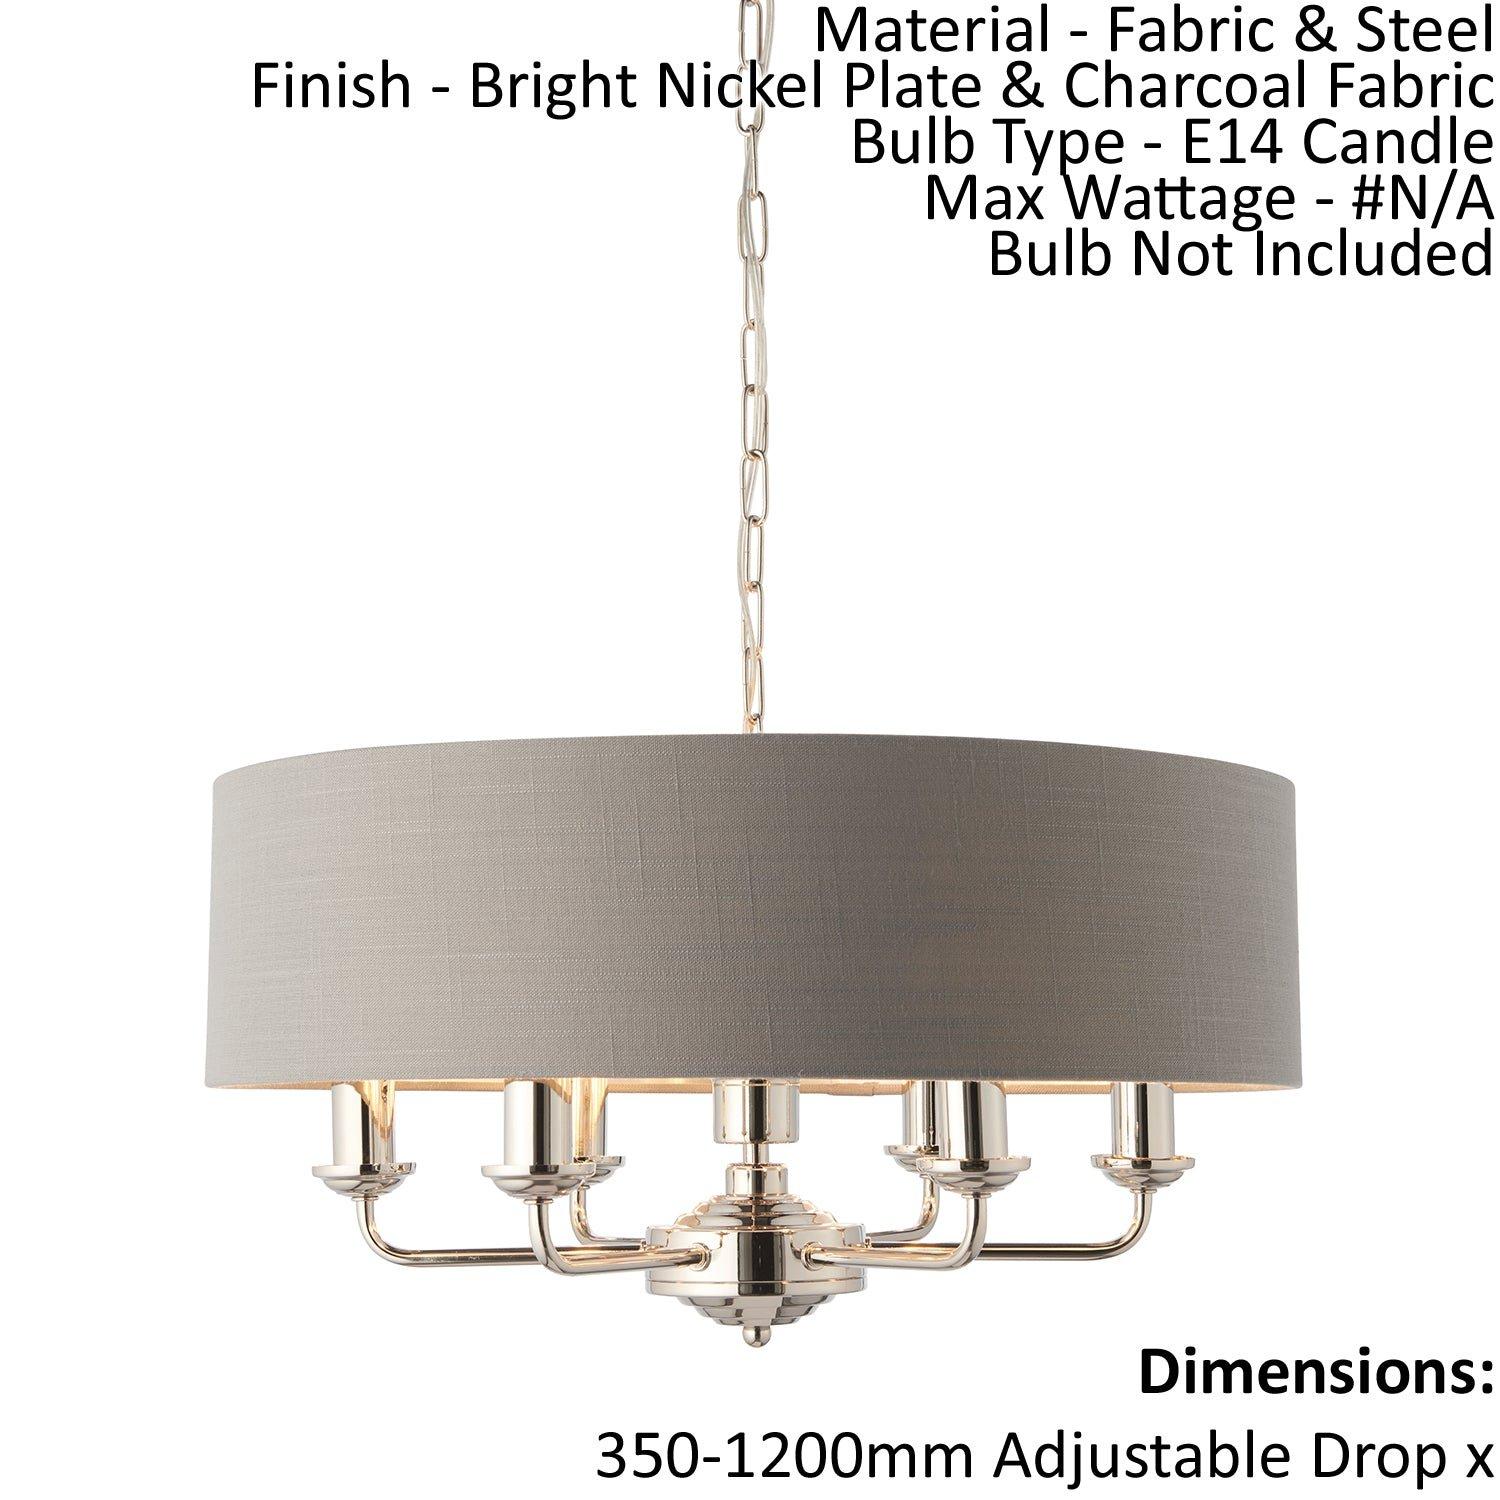 Ceiling Pendant Light - Bright Nickel & Charcoal Fabric - 6 x 40W E14 - e10242